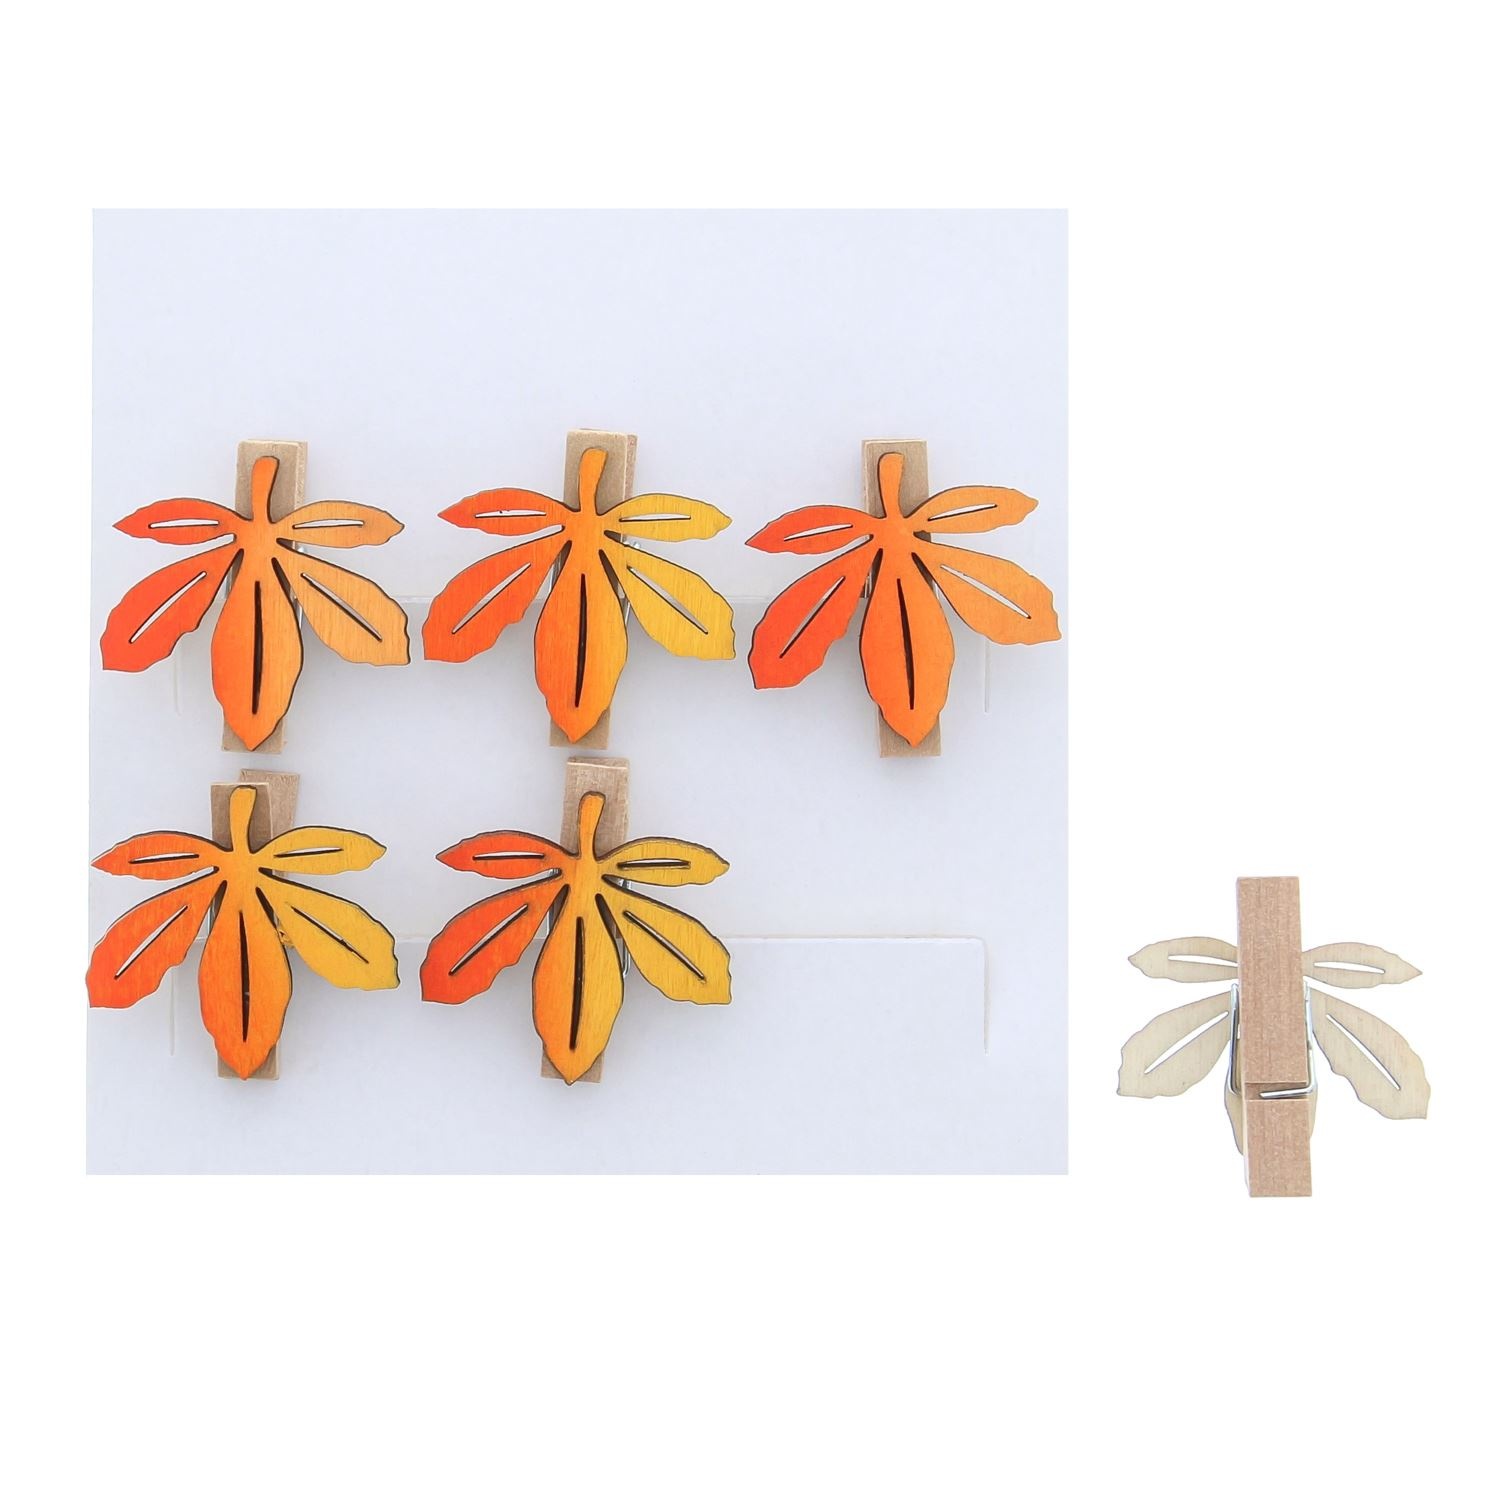 Chestnut leaf clip yellow/orange  - 35*12*35mm - 36 pieces